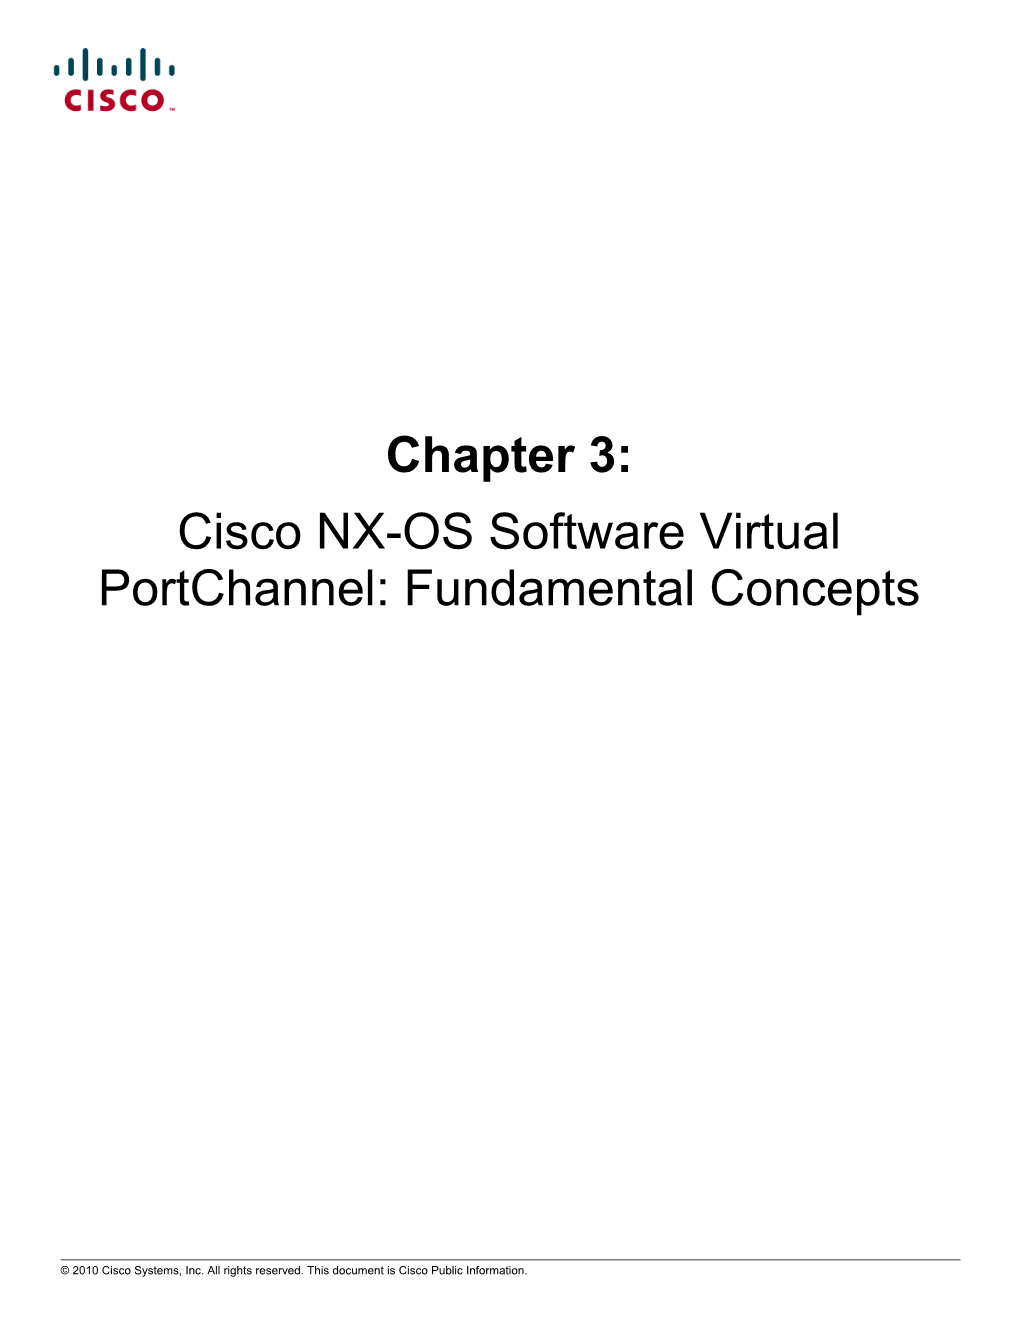 Cisco NX-OS Software Virtual Portchannel: Fundamental Concepts